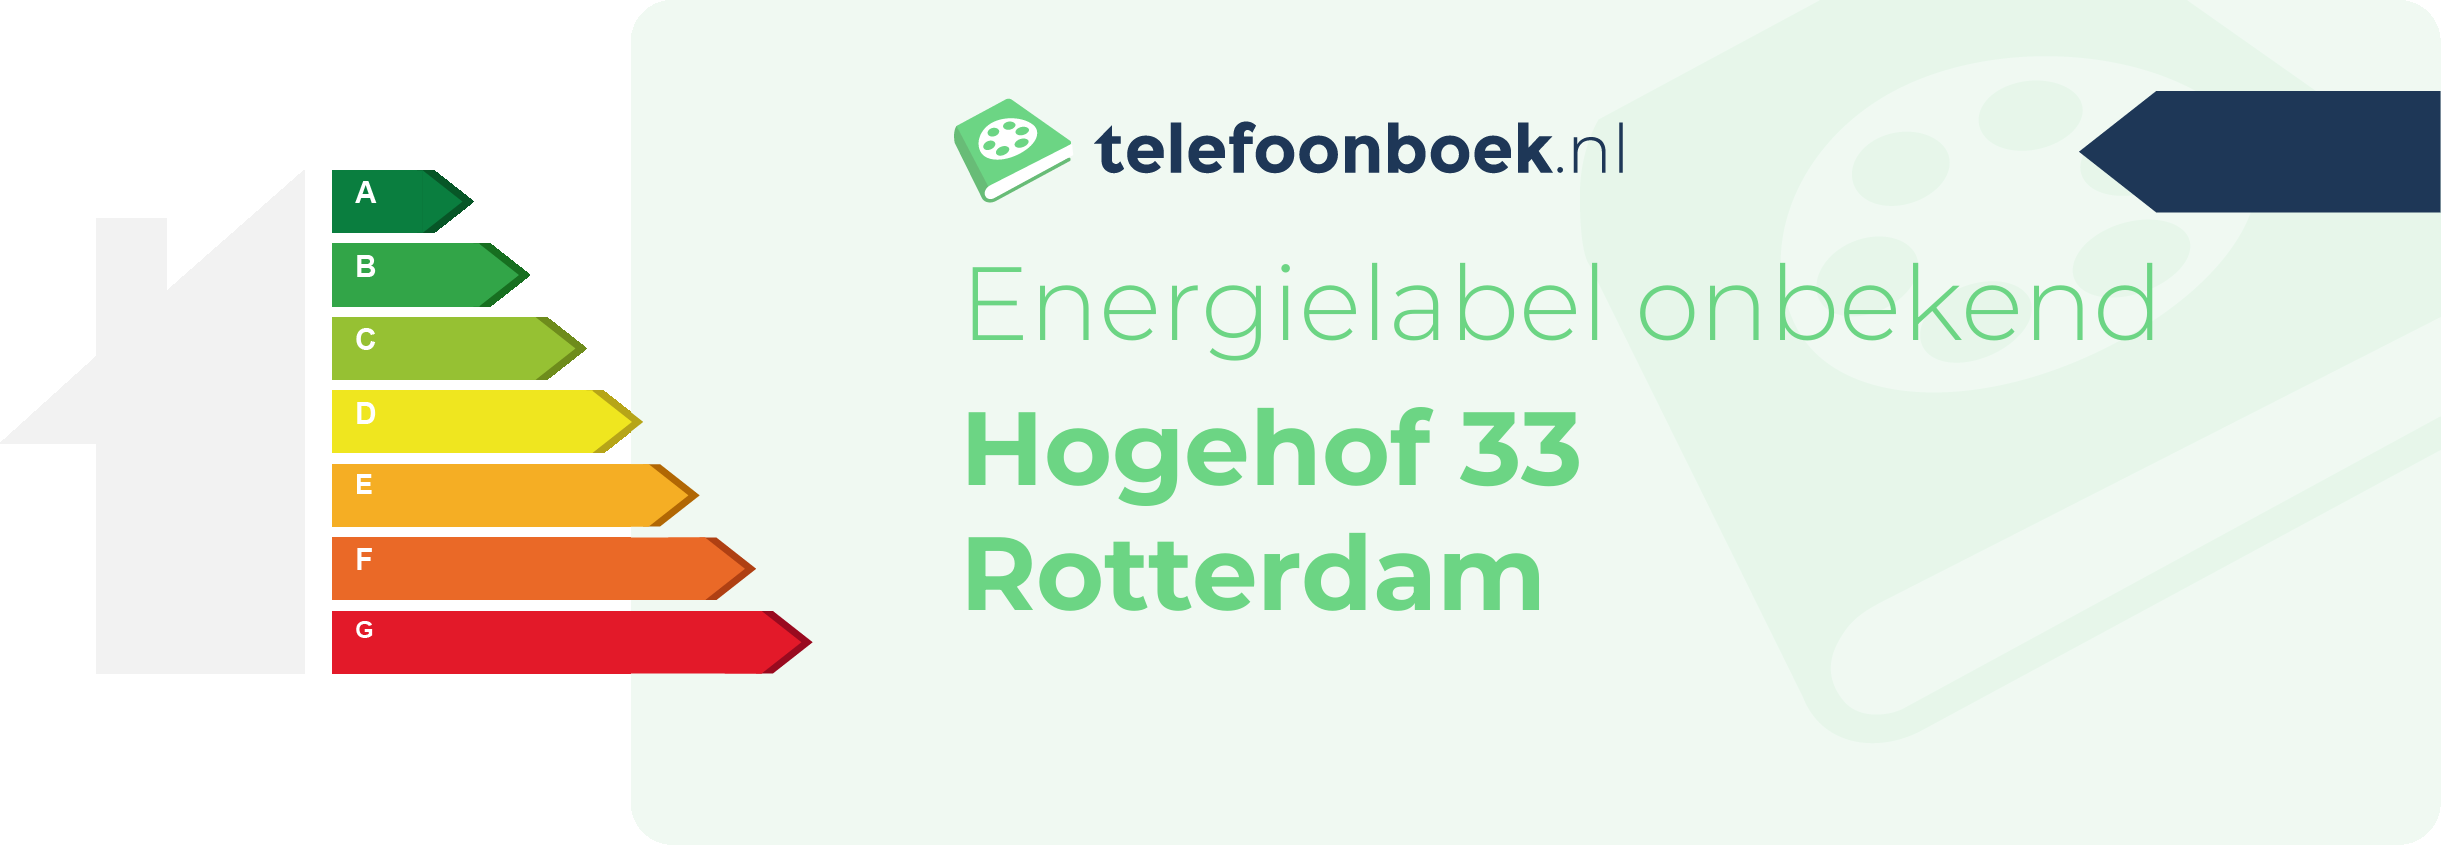 Energielabel Hogehof 33 Rotterdam